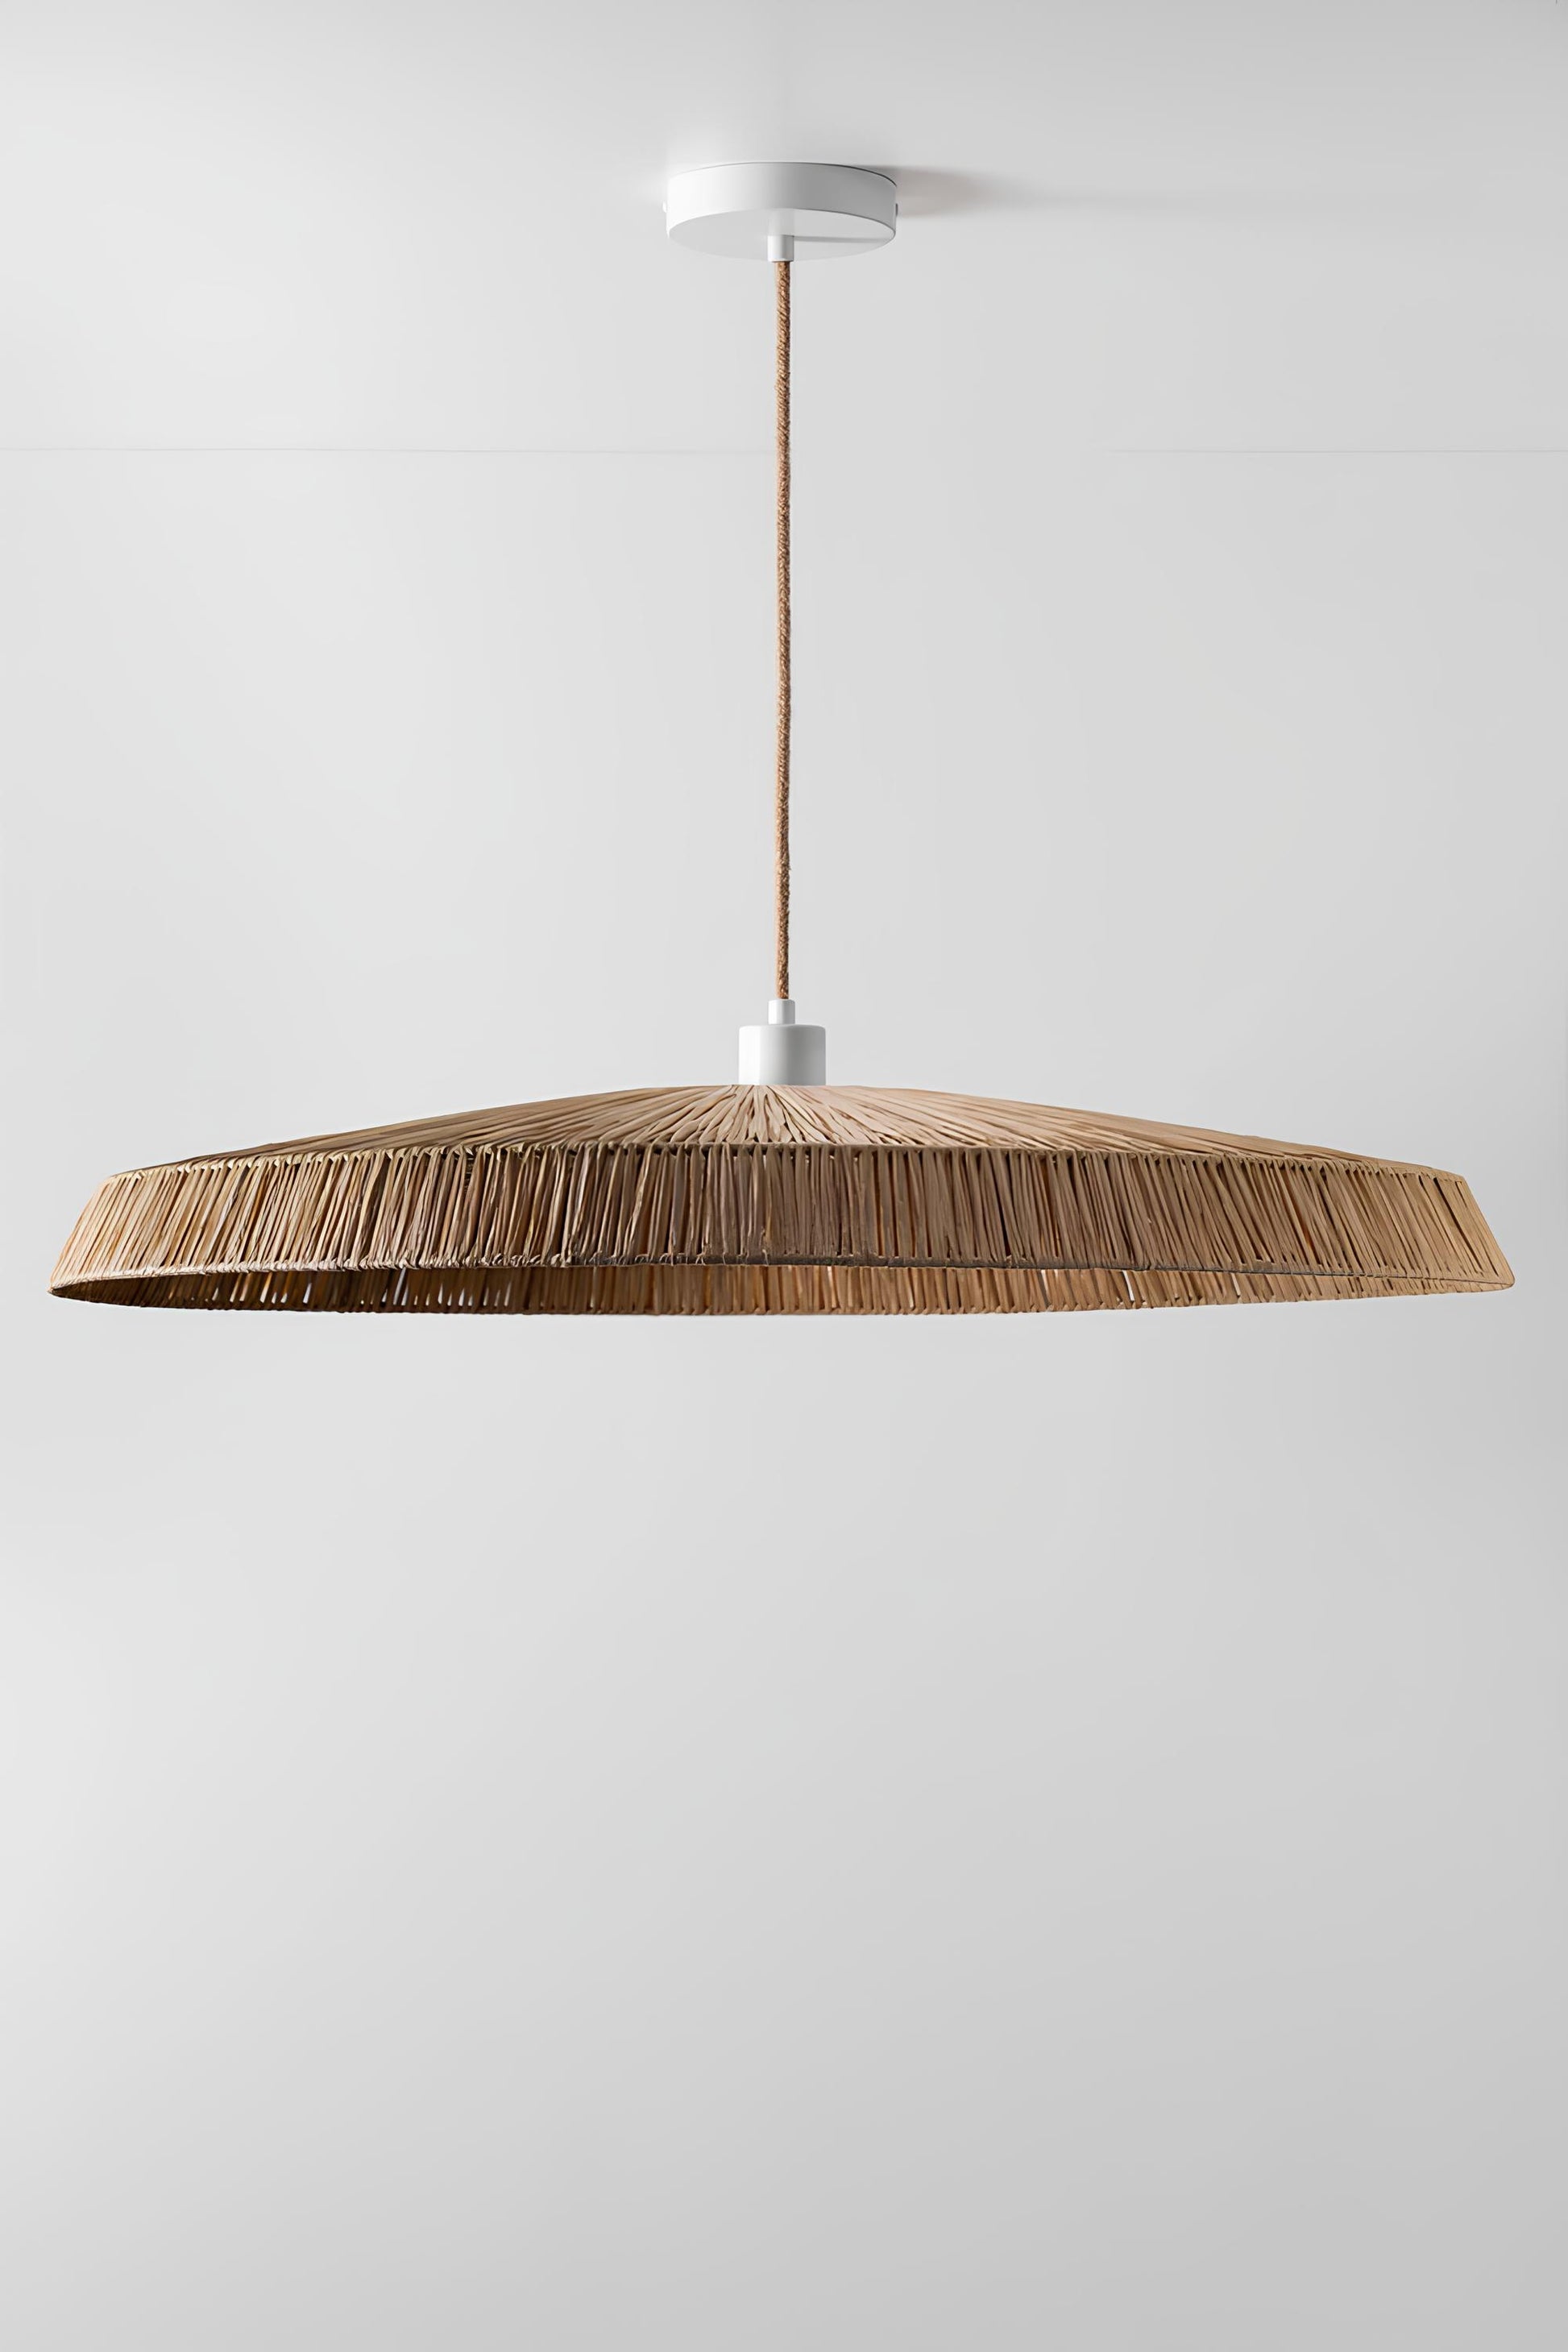 Bamboo Hanging lamp for Living Room | Rattan Pendant light | Cane ceiling light - Kaia - Akway